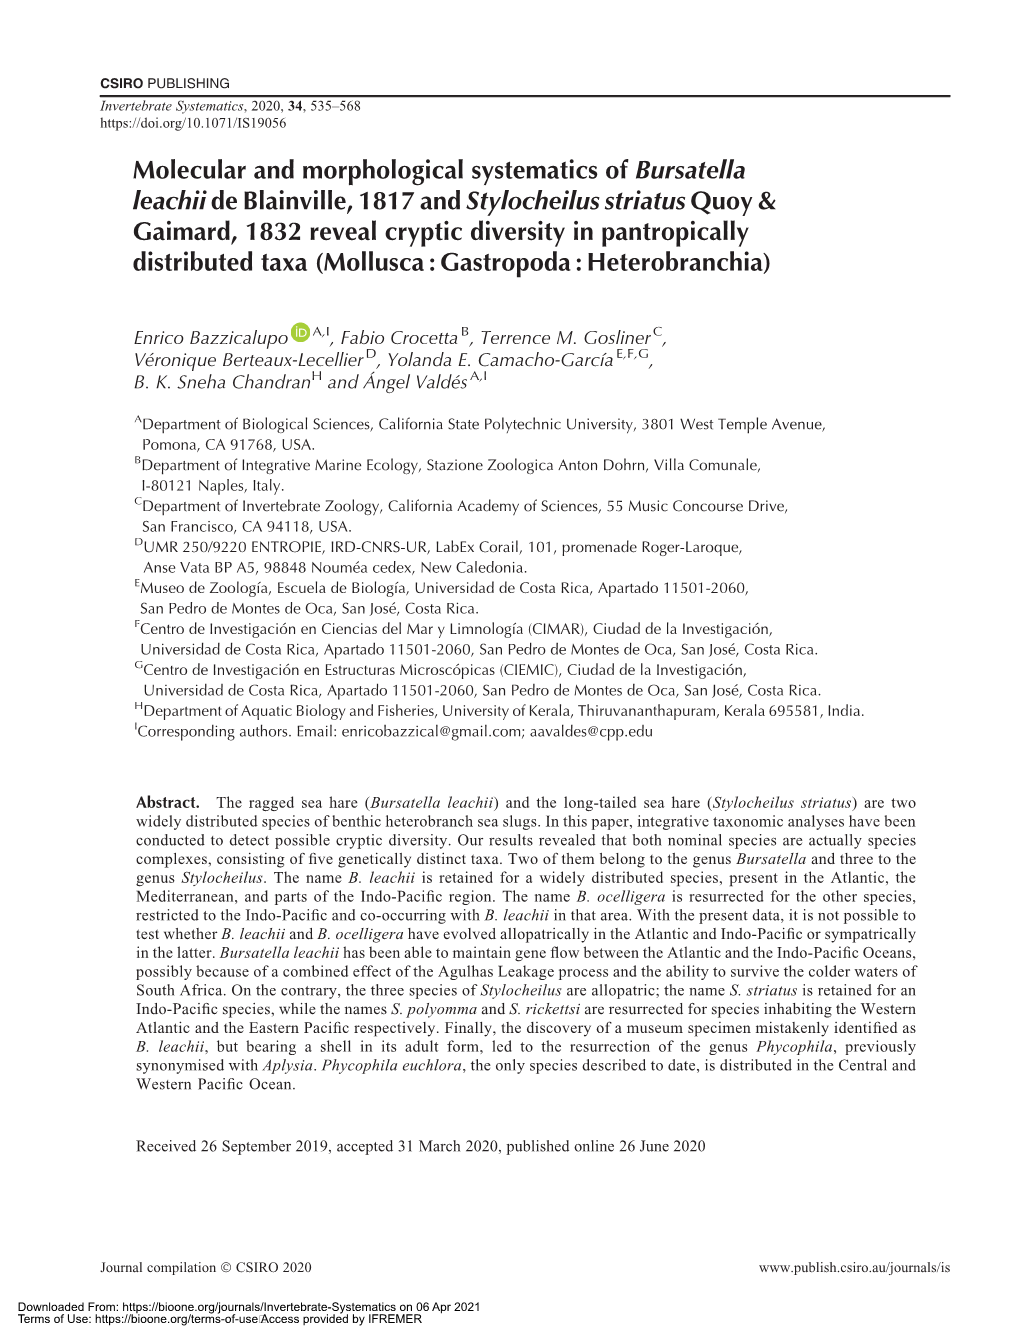 Molecular and Morphological Systematics of Bursatella